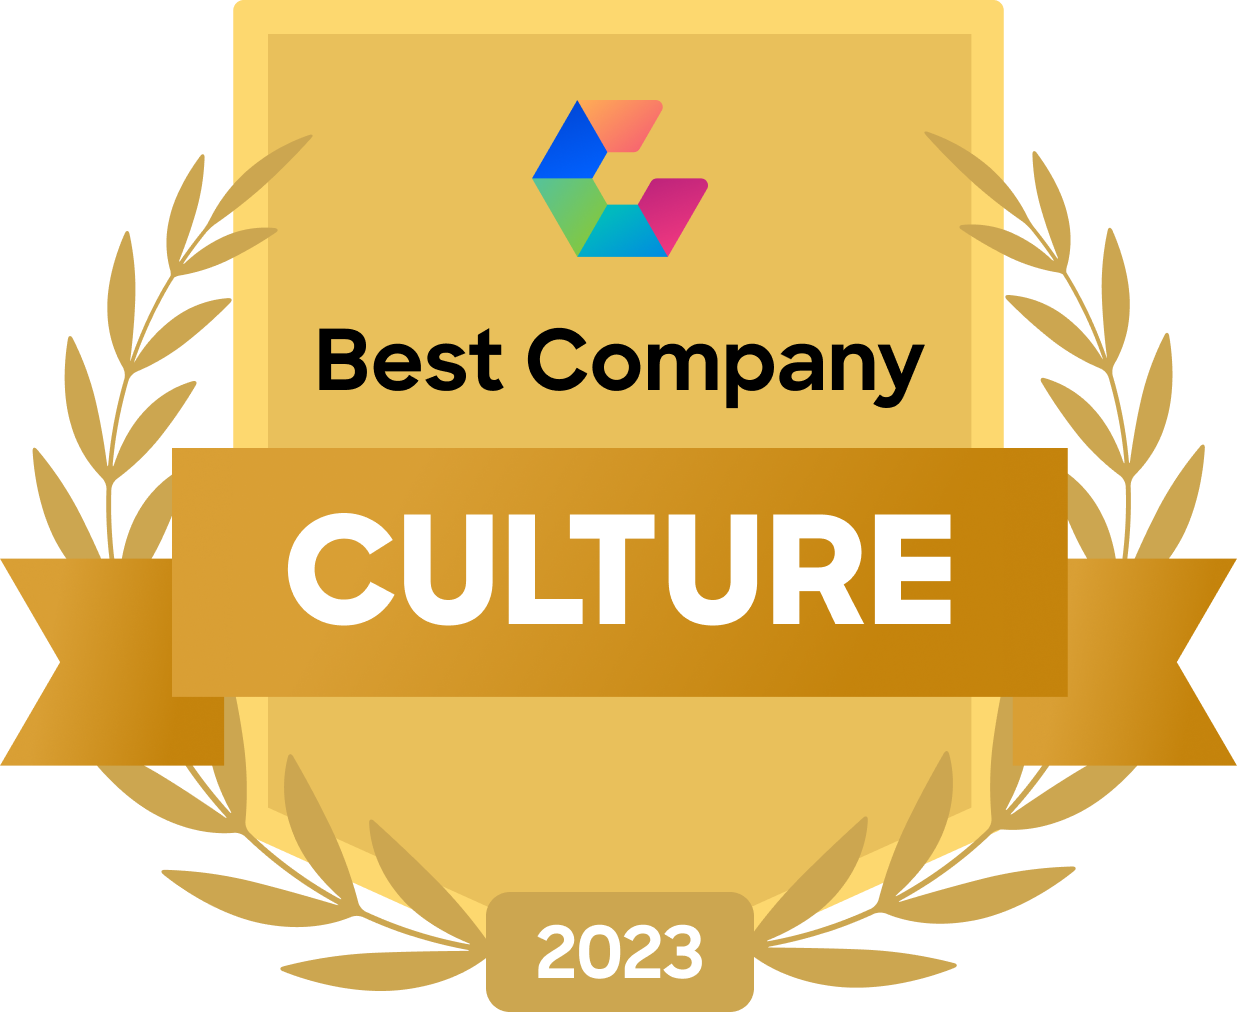 Best Company Culture Award